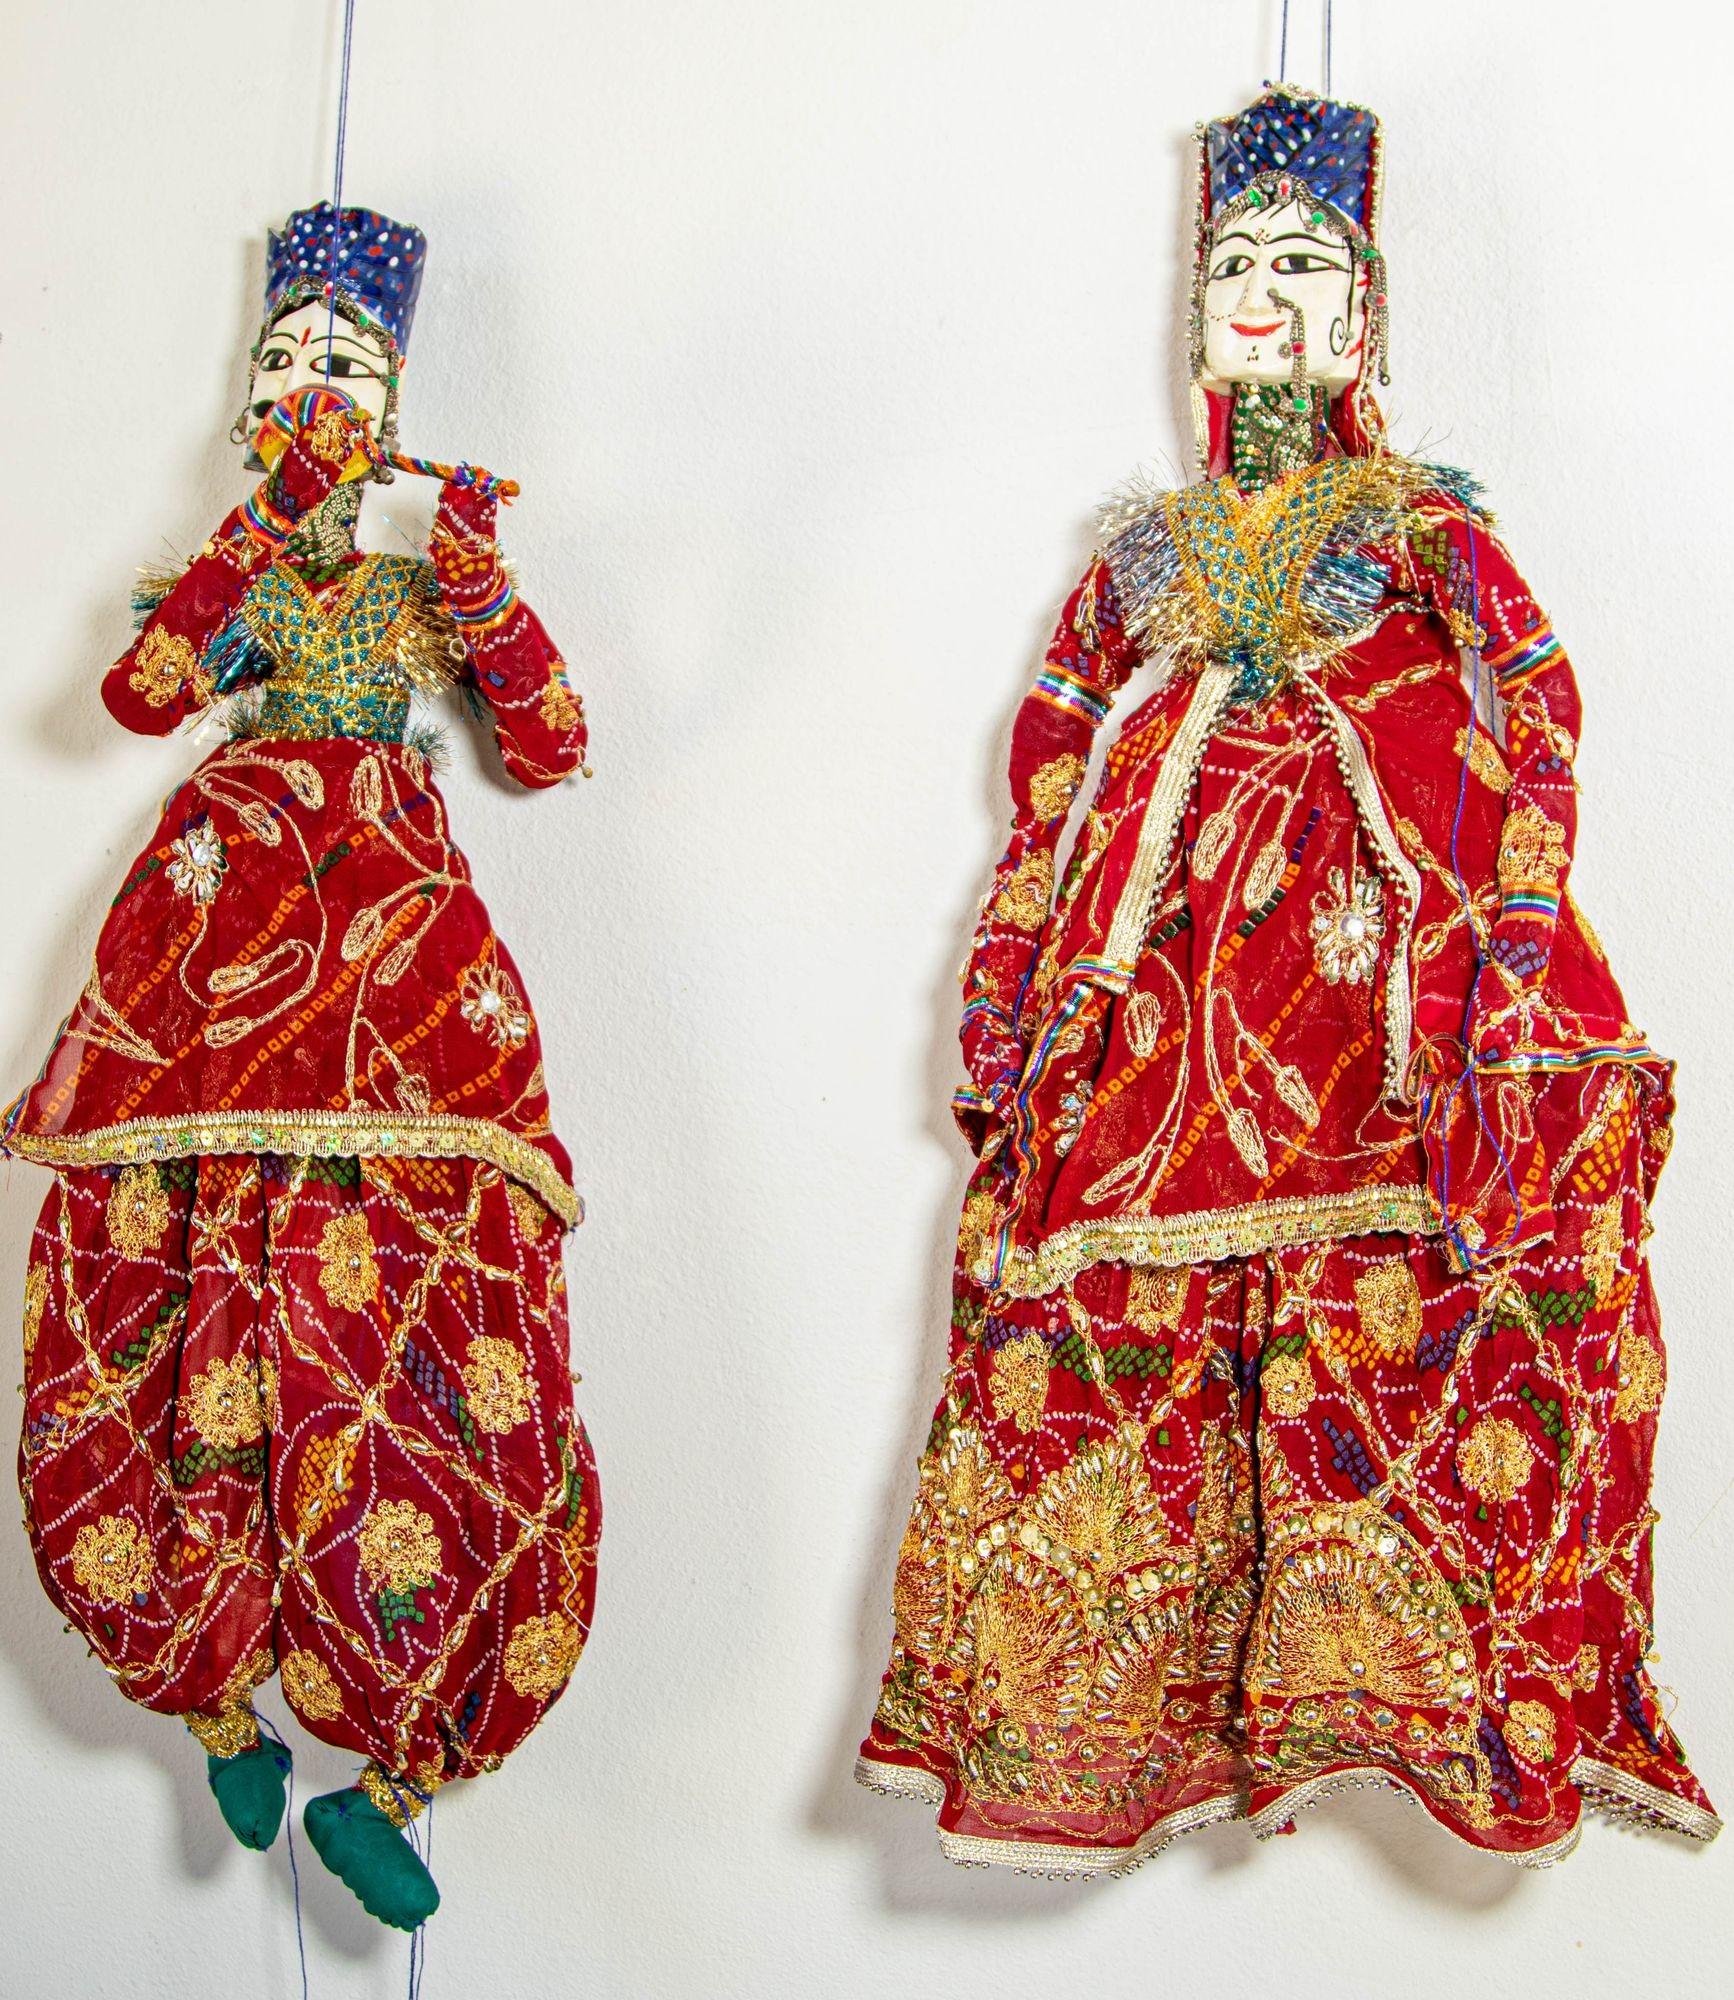 Handmade Rajasthani Kathputli Dancing Puppet Couple Jaipur India 1950s For Sale 7